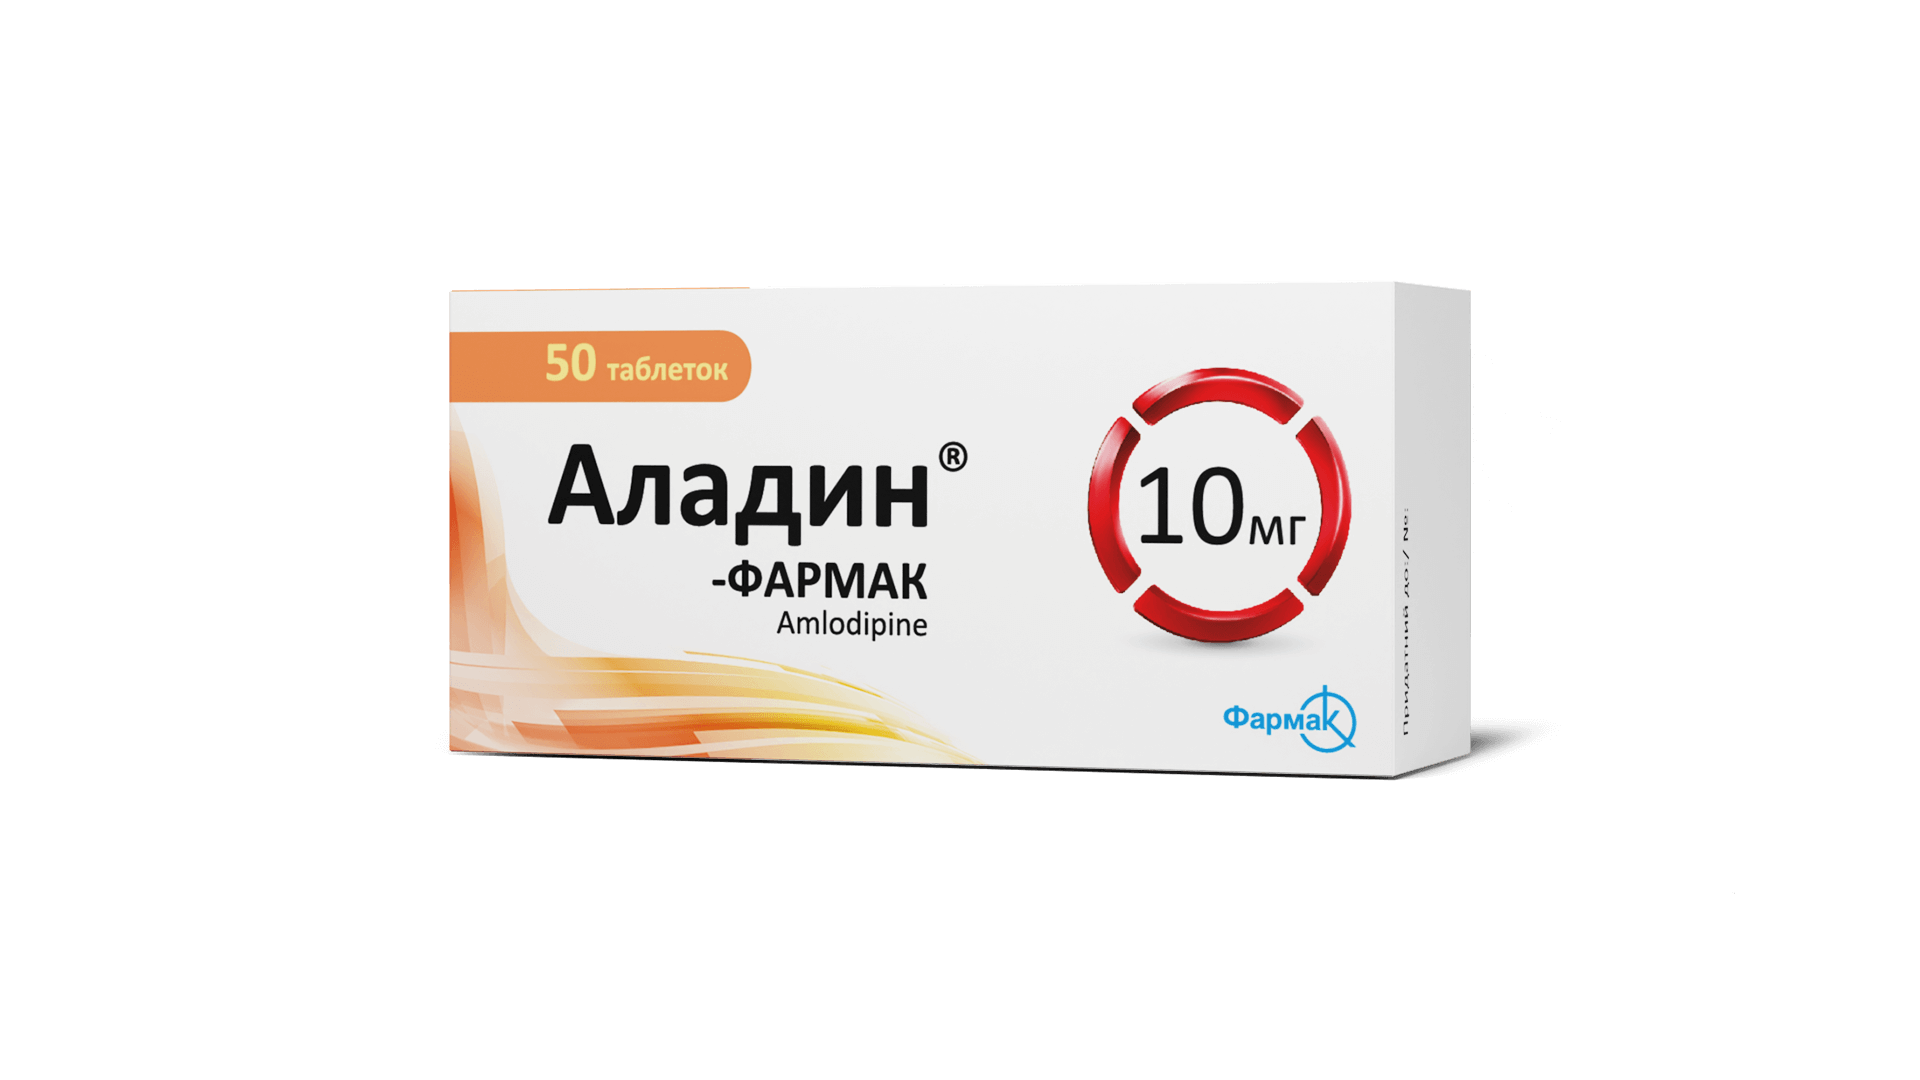 Аладин — Фармак 10 мг (6)